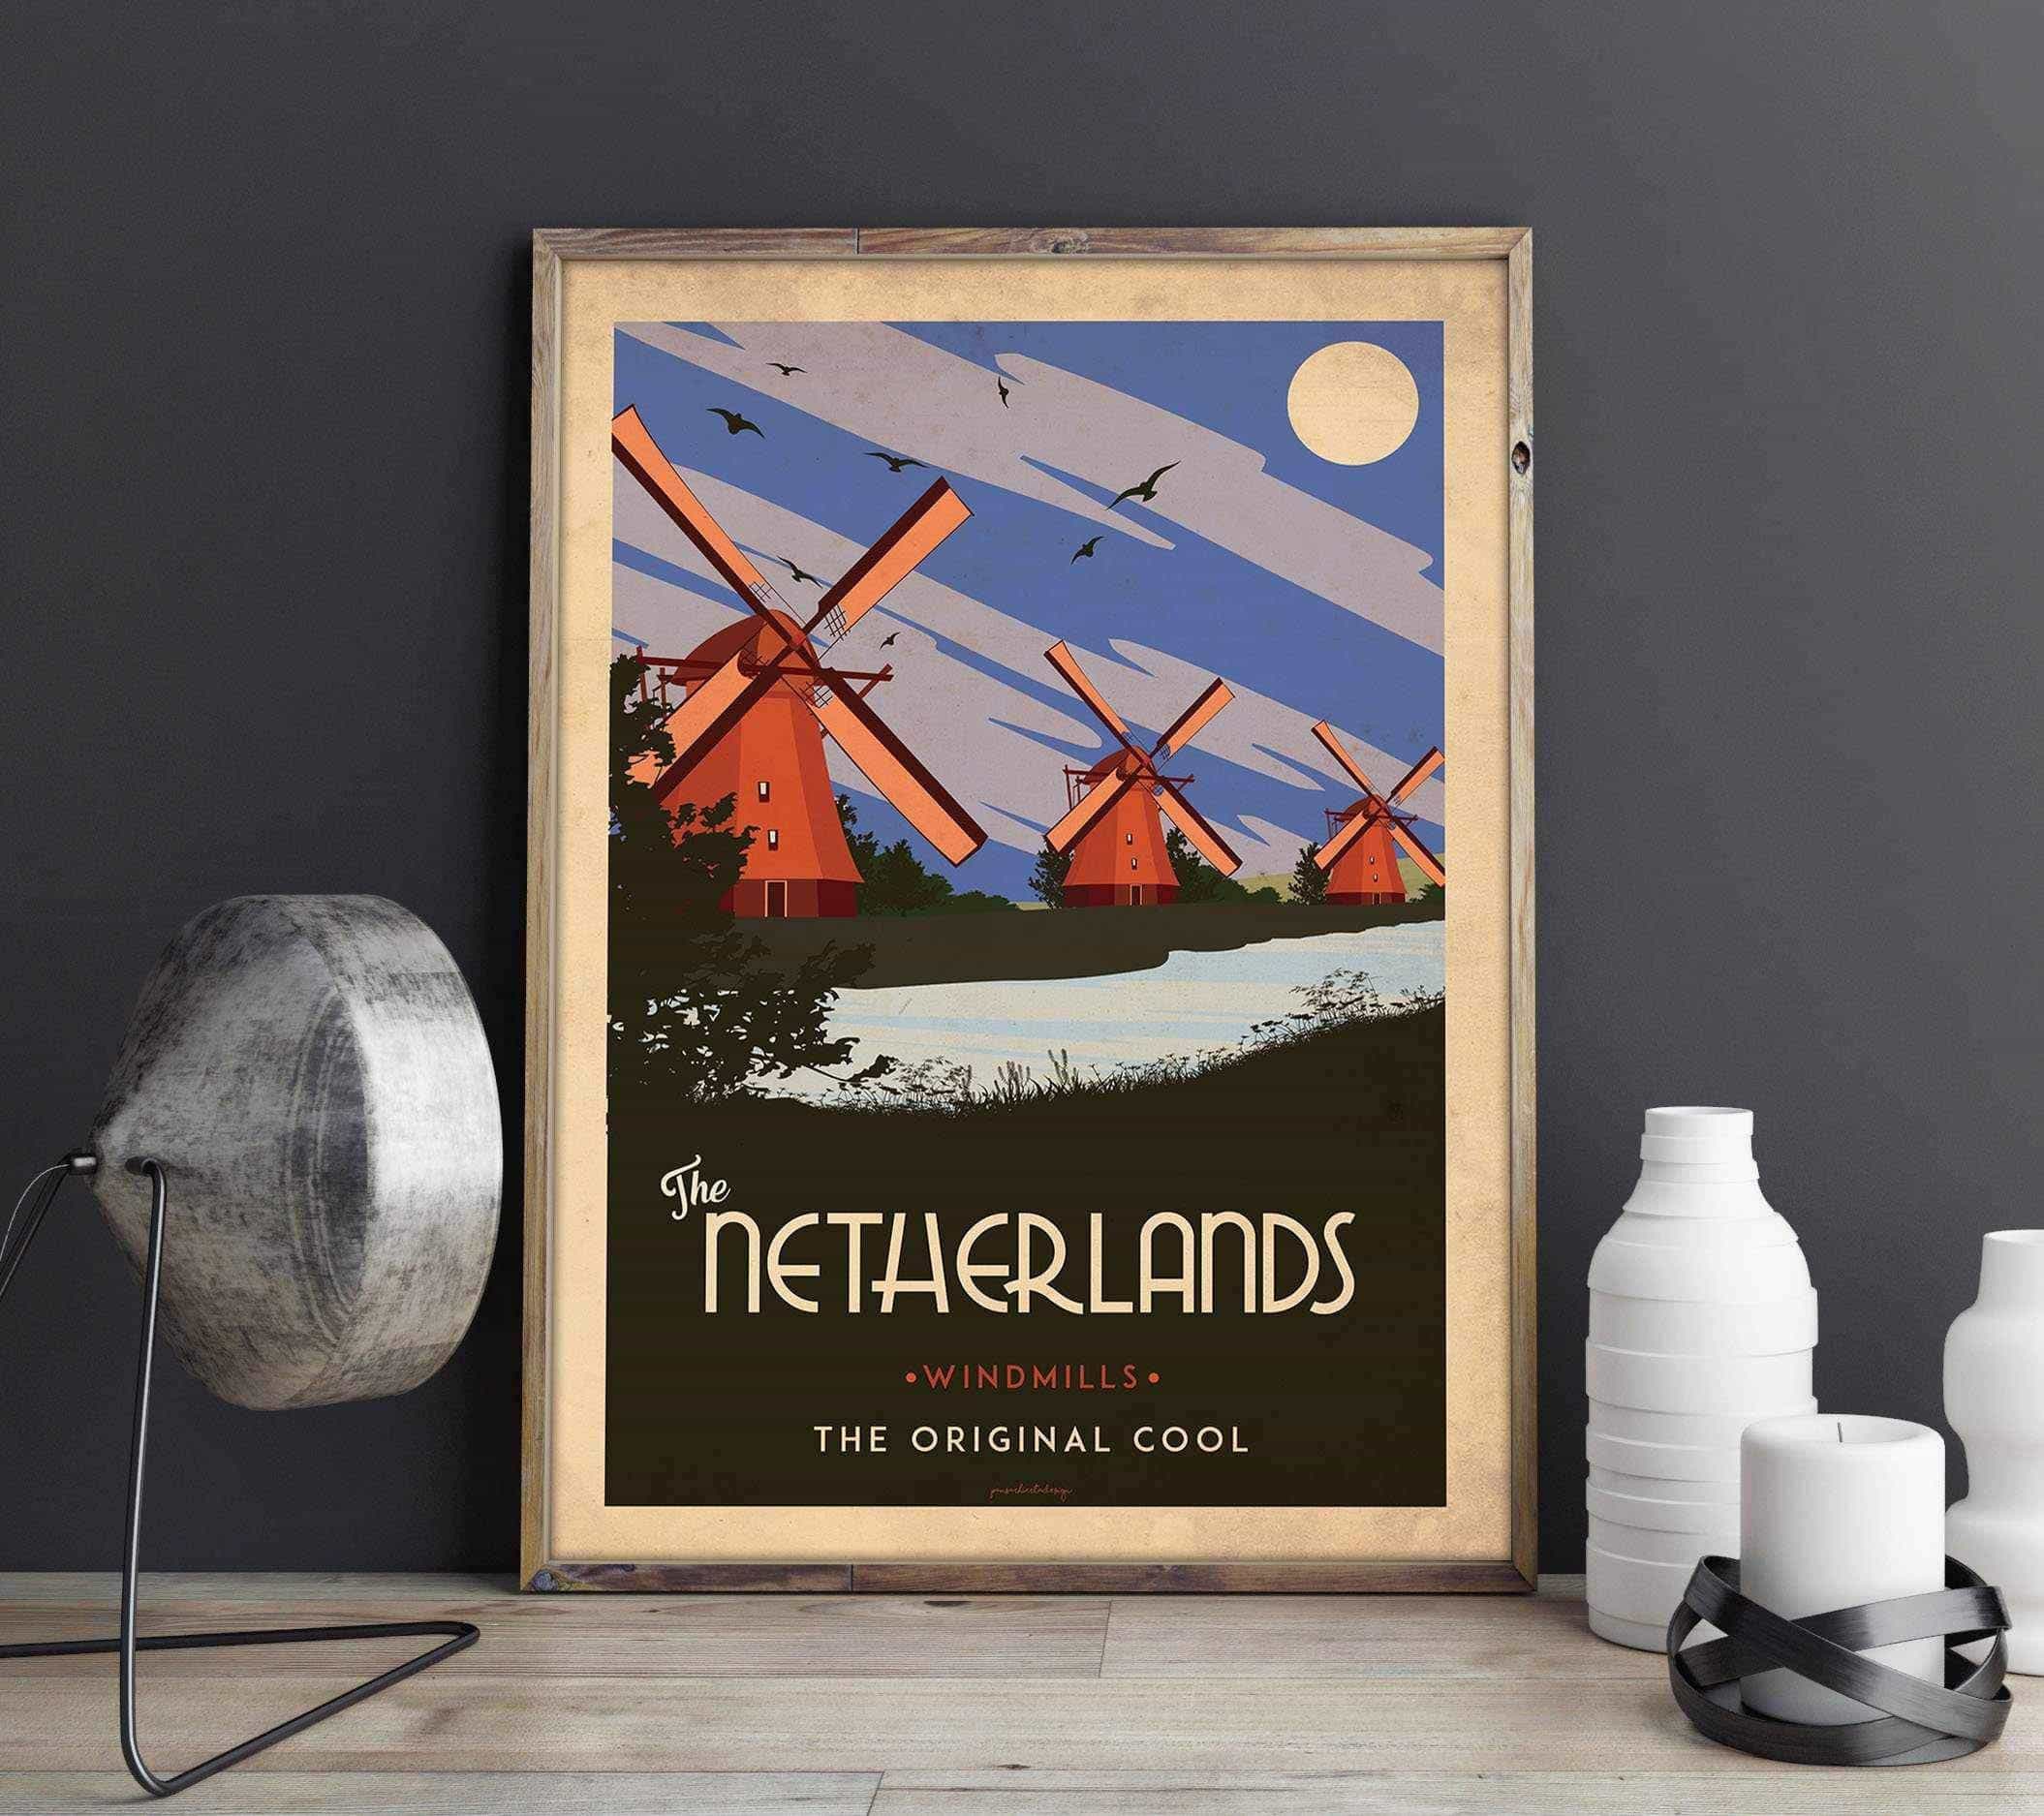 Art deco - The Netherlands - World collection Posters, affischer, tavlor Pansarhierta